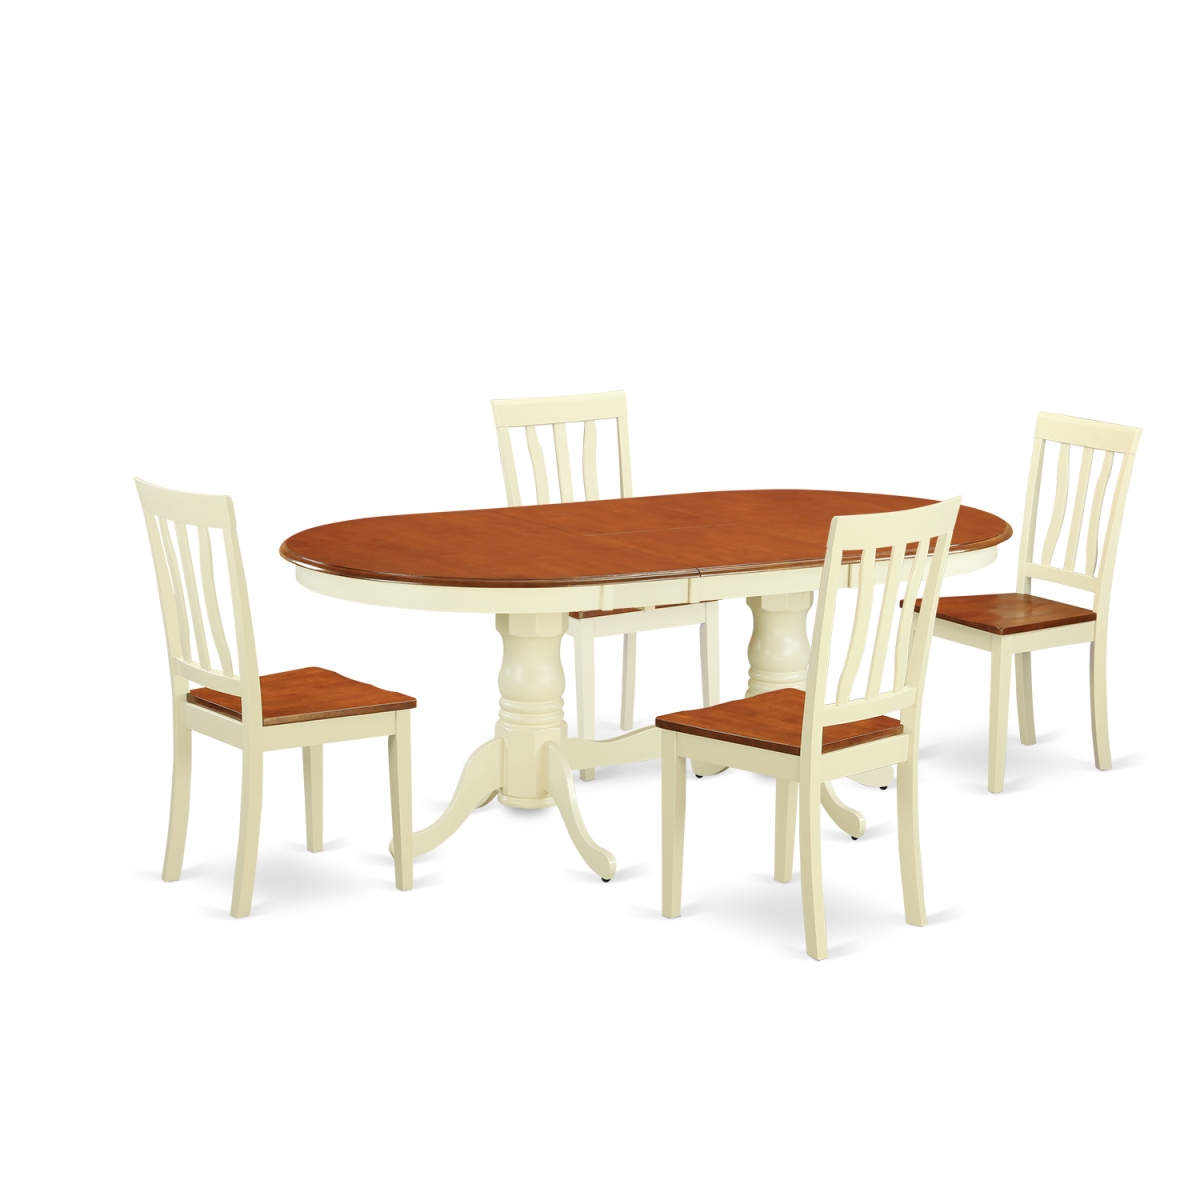 Plan5-whi-w Wood Seat Dinette Set - Kitchen Table & 4 Chairs, Buttermilk & Cherry - 5 Piece